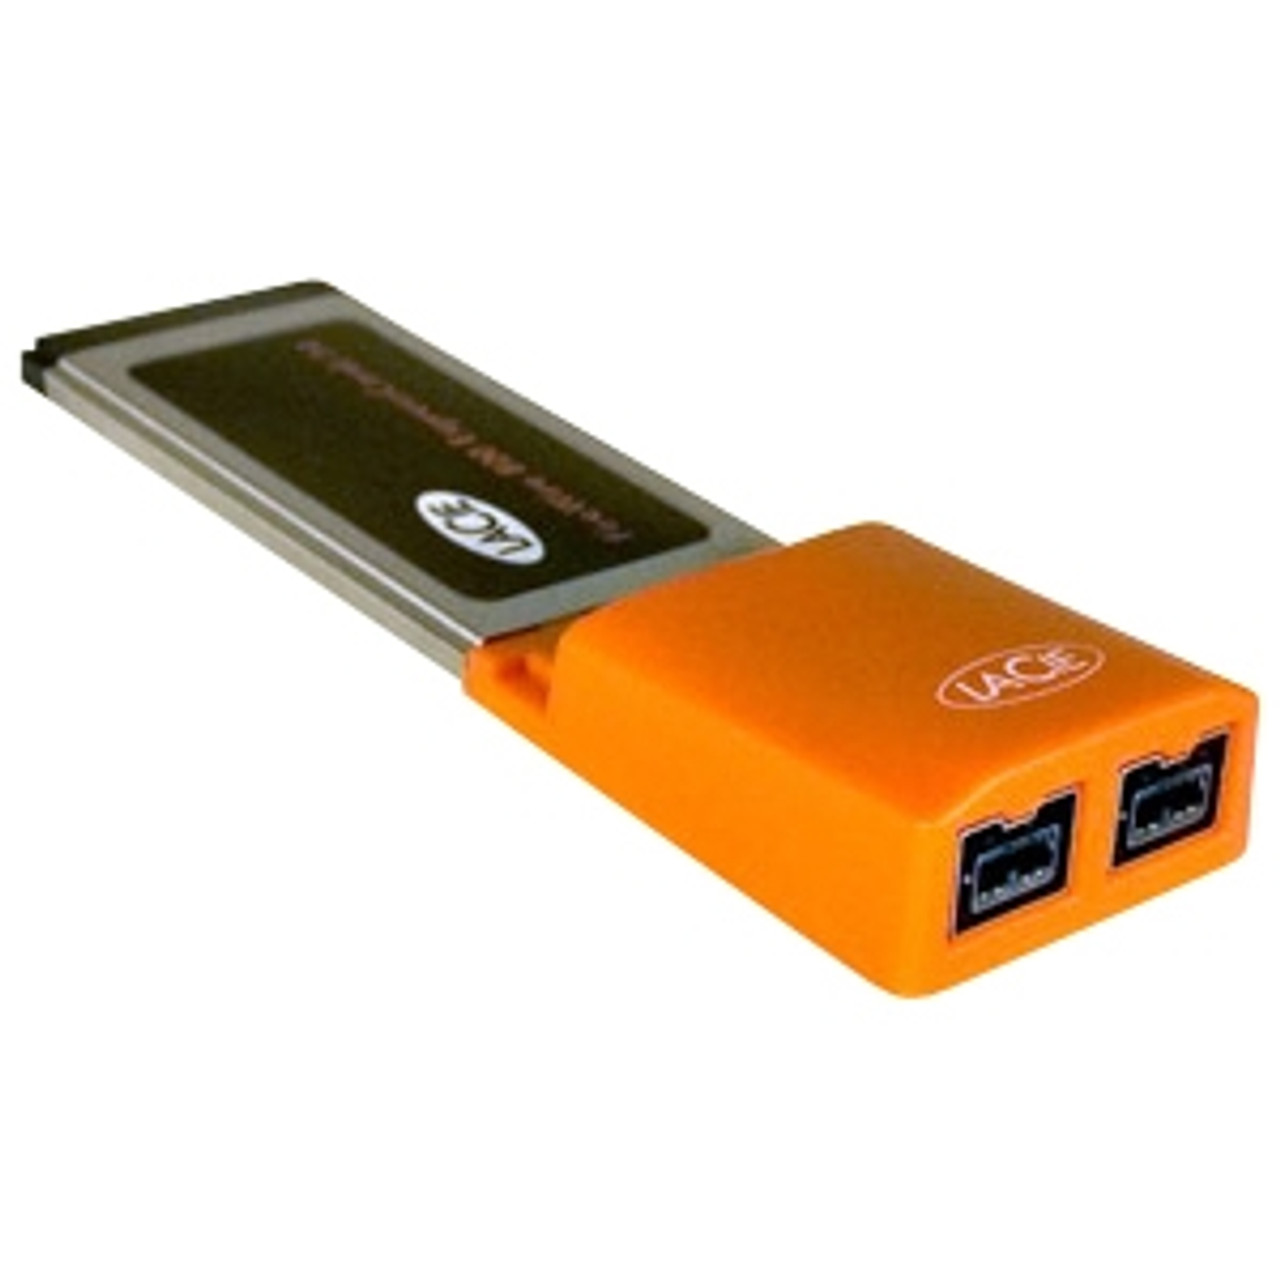 130992 - LaCie 130992 2-port ExpressCard FireWire Adapter - 2 x 9-pin IEEE 1394b FireWire - Plug-in Module